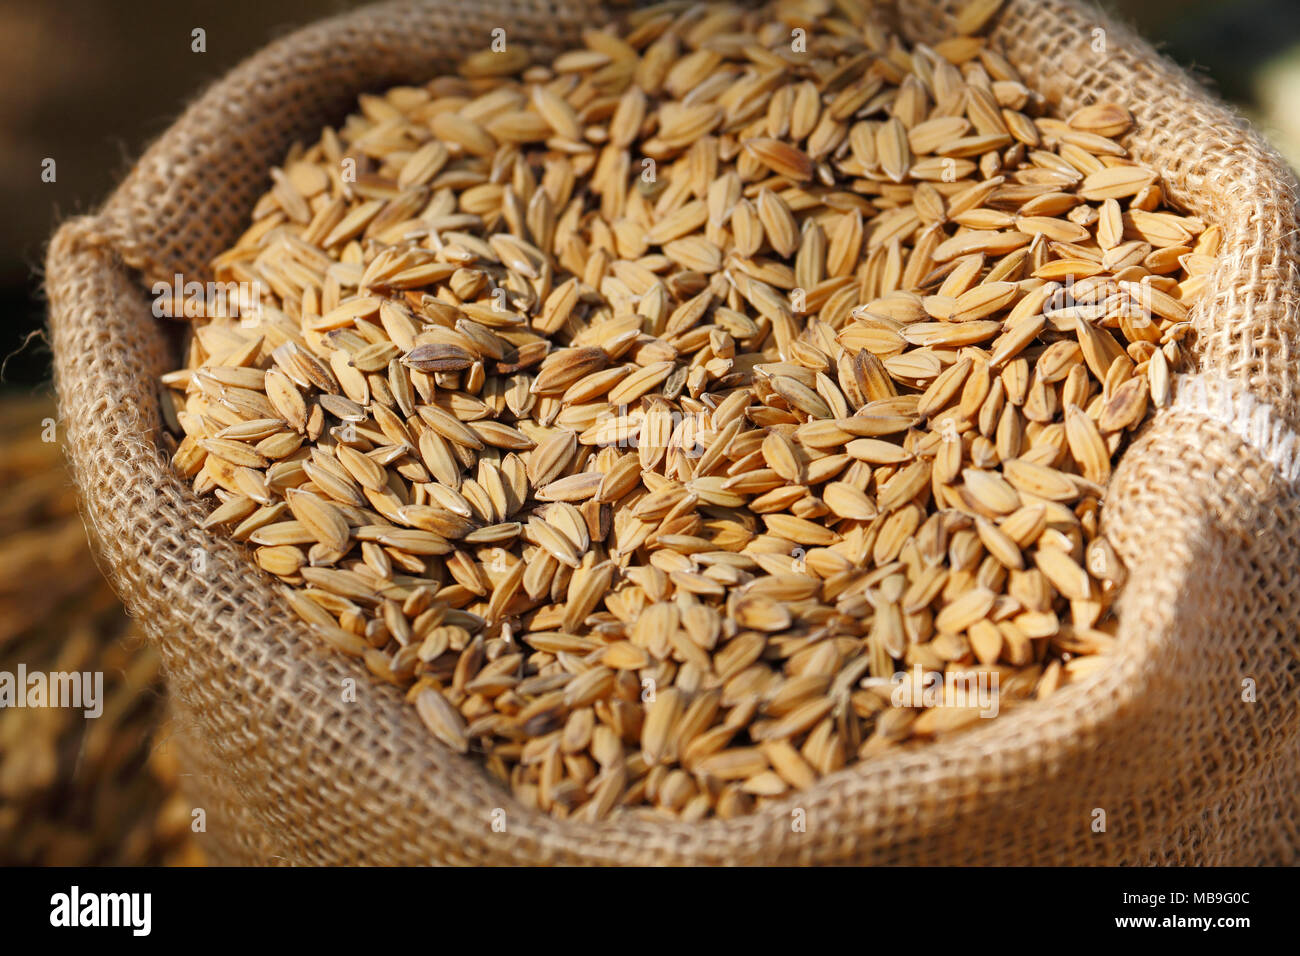 Unmilled-Reis in Braun hanf Sack Stockfoto